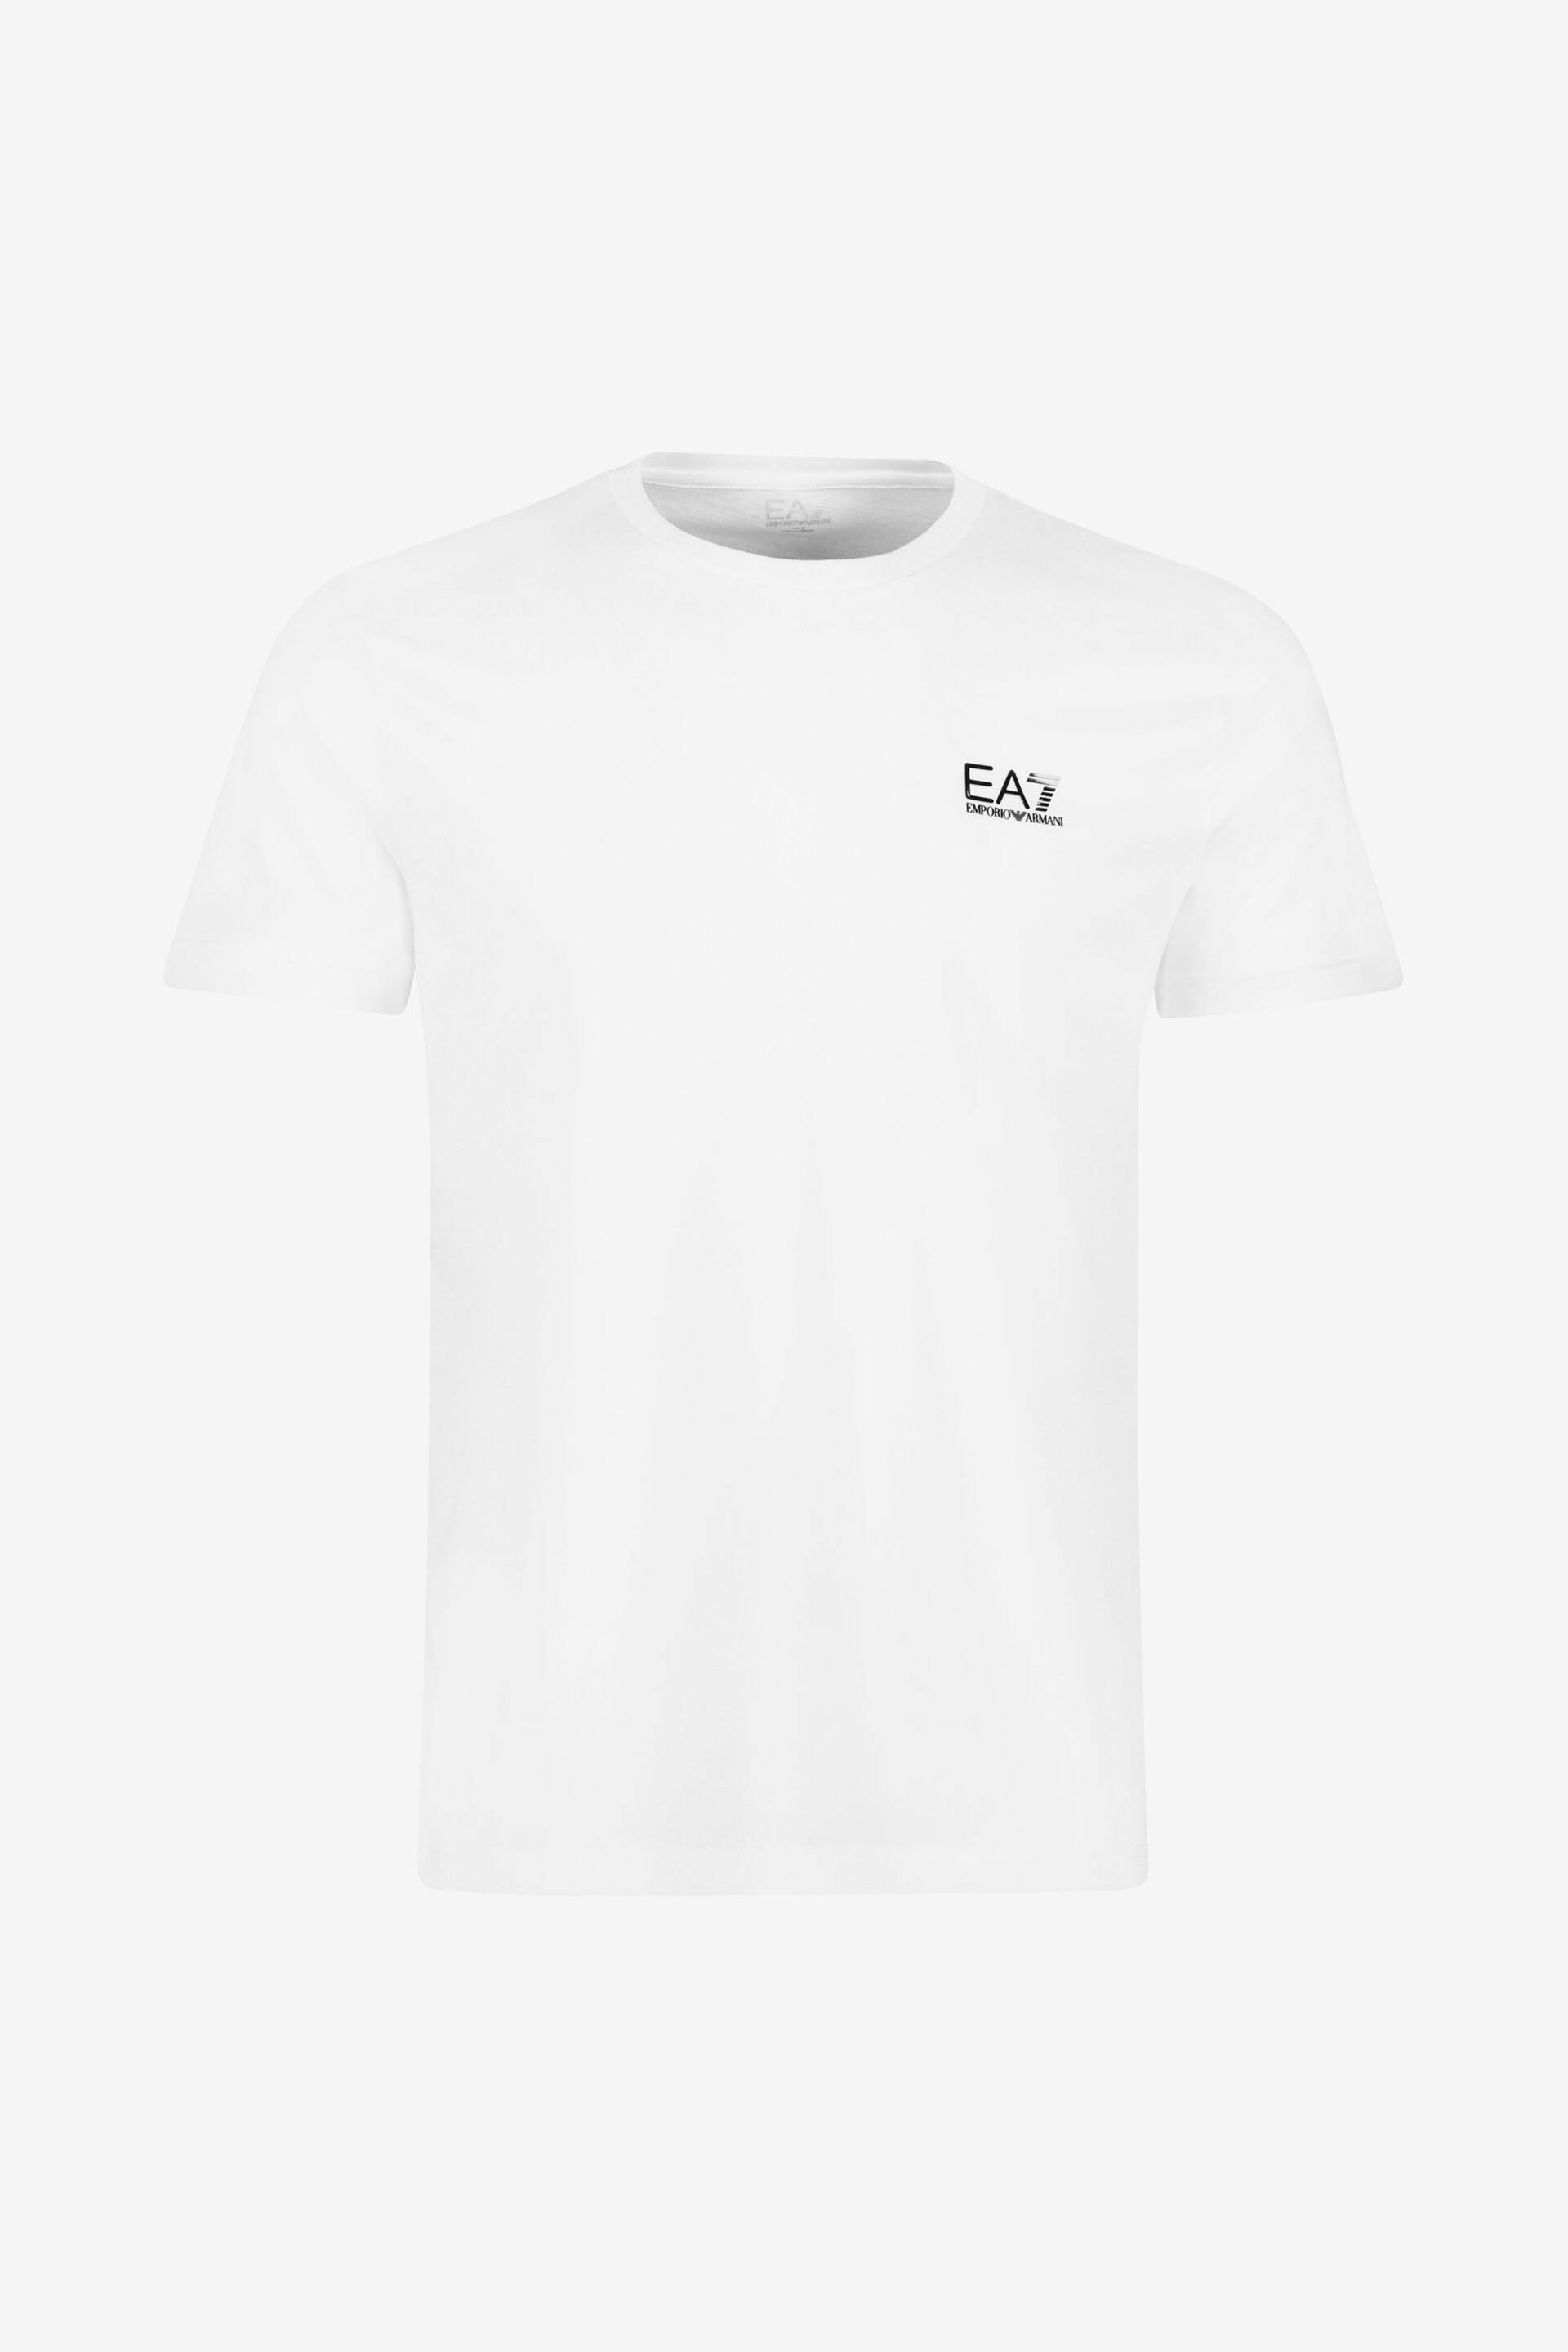 Emporio Armani EA7 Logo T-Shirt - Image 4 of 4